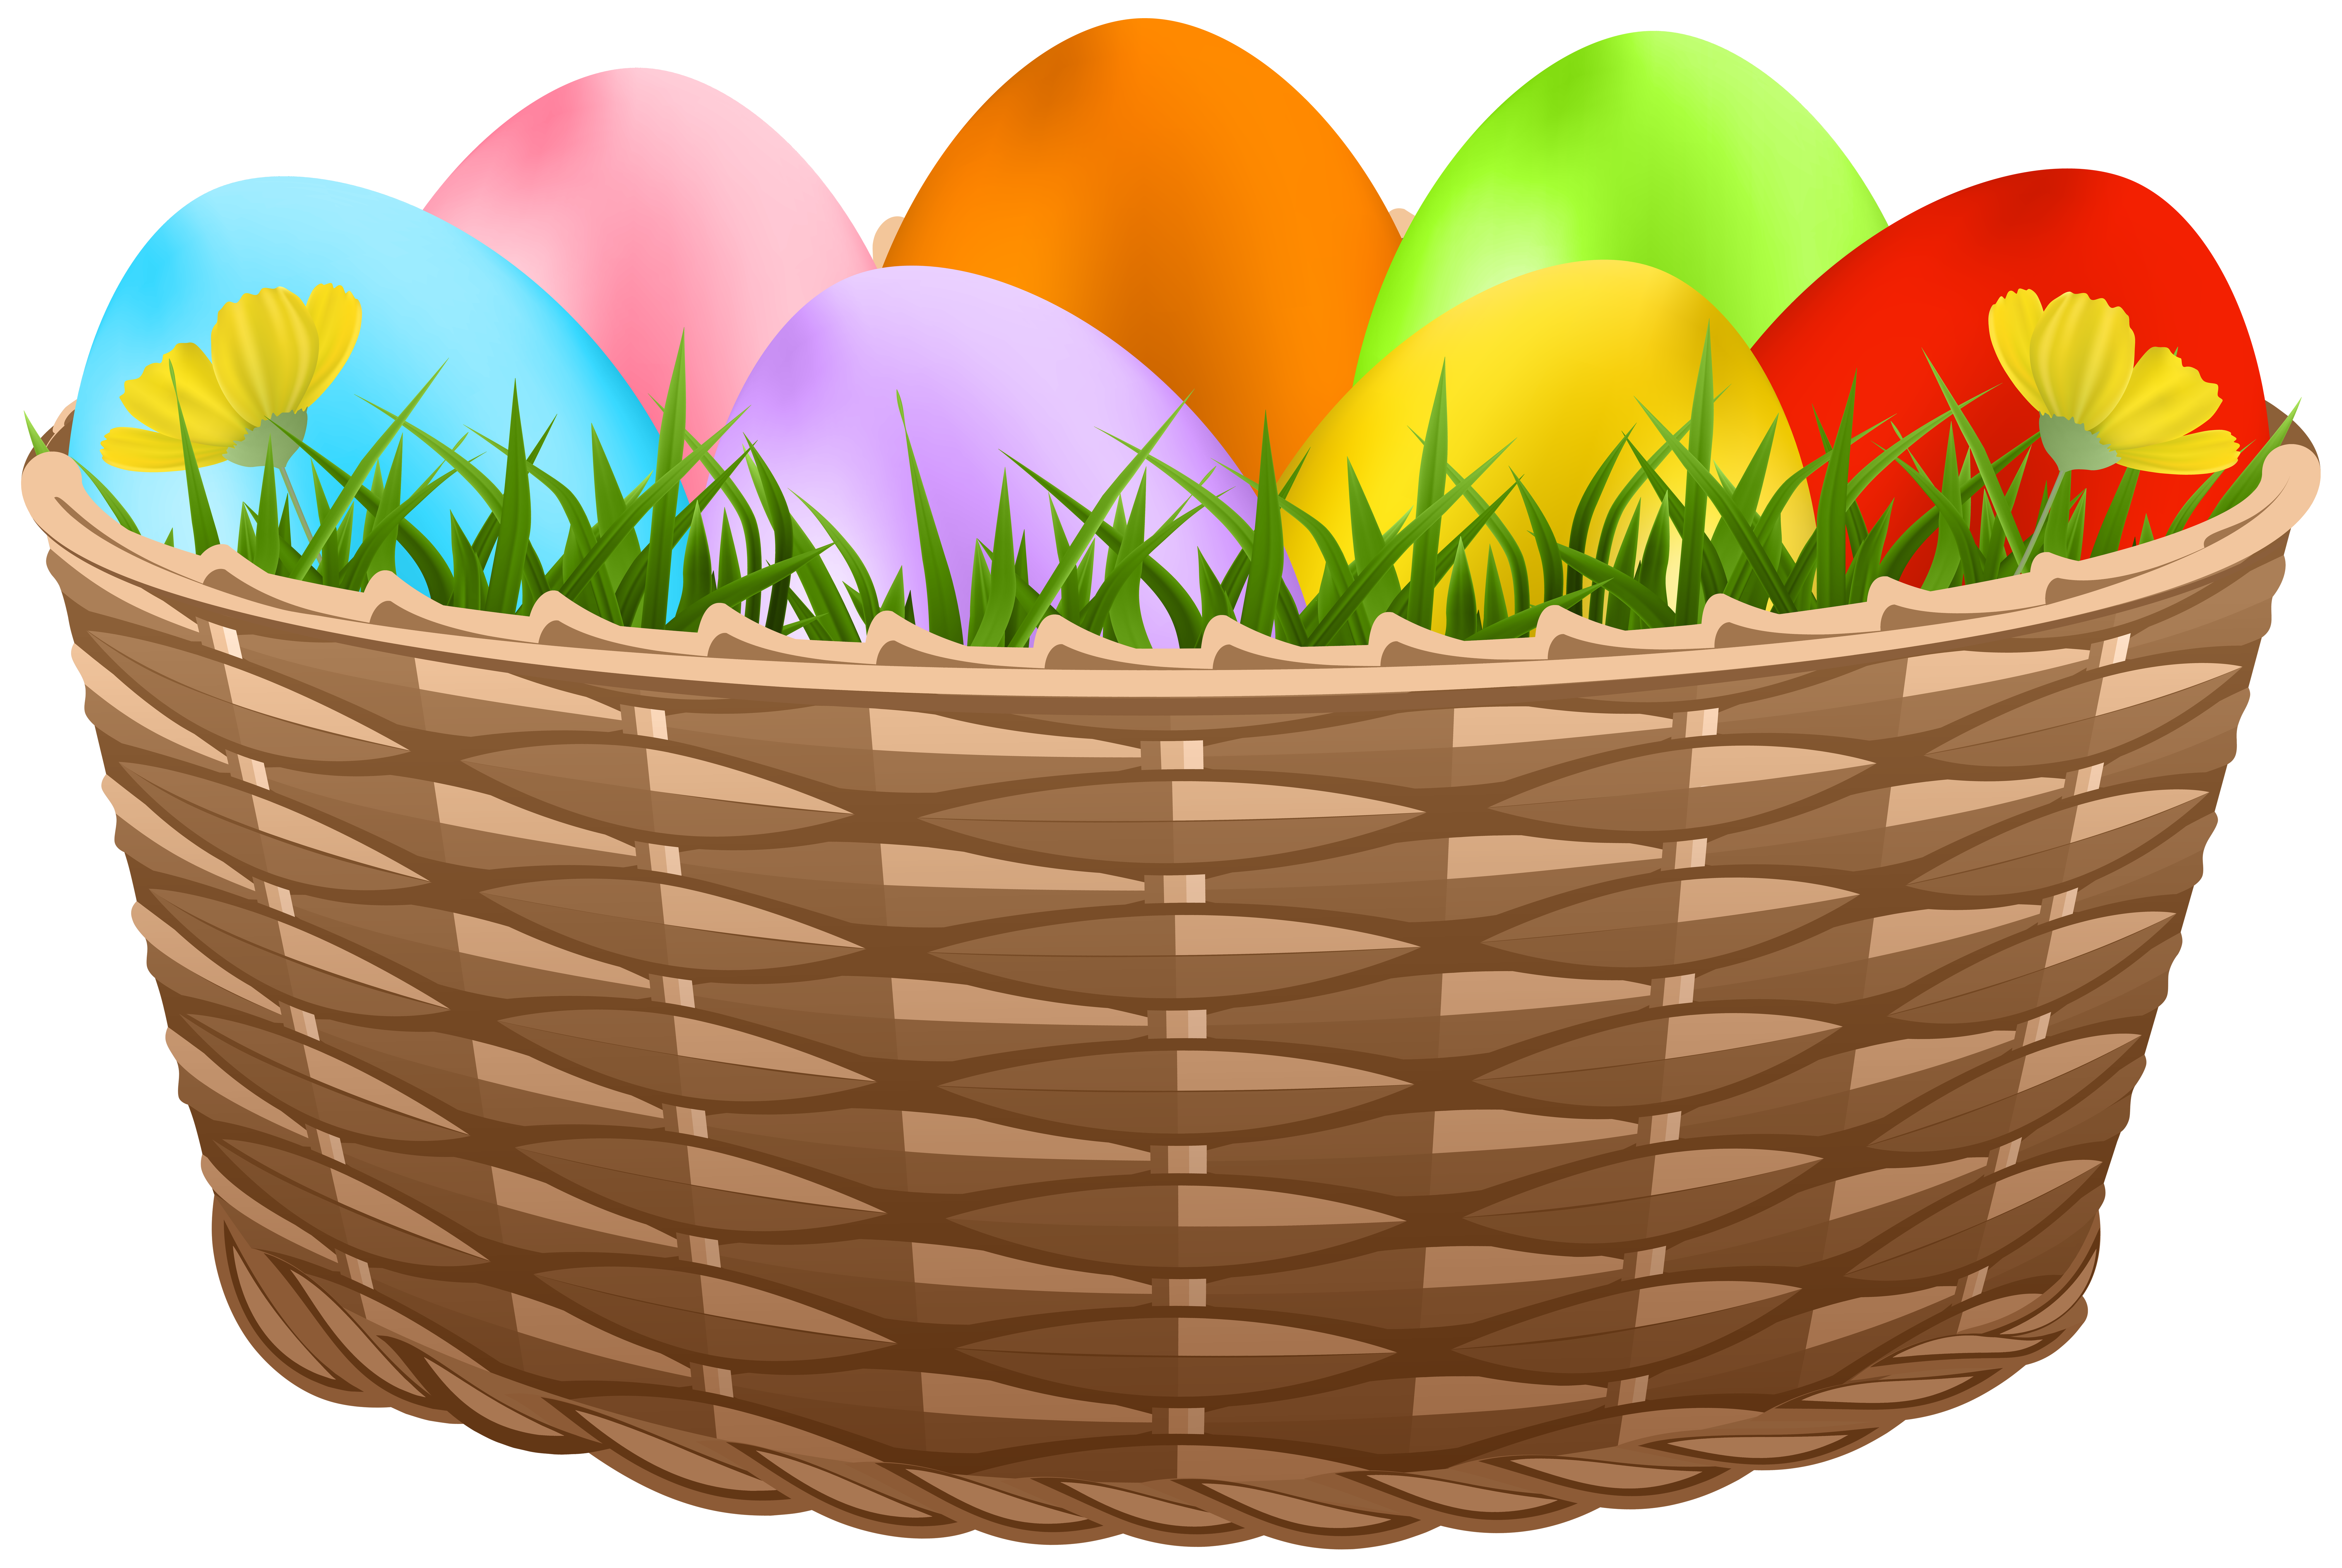 Easter Eggs in Basket PNG Transparent Clipart​